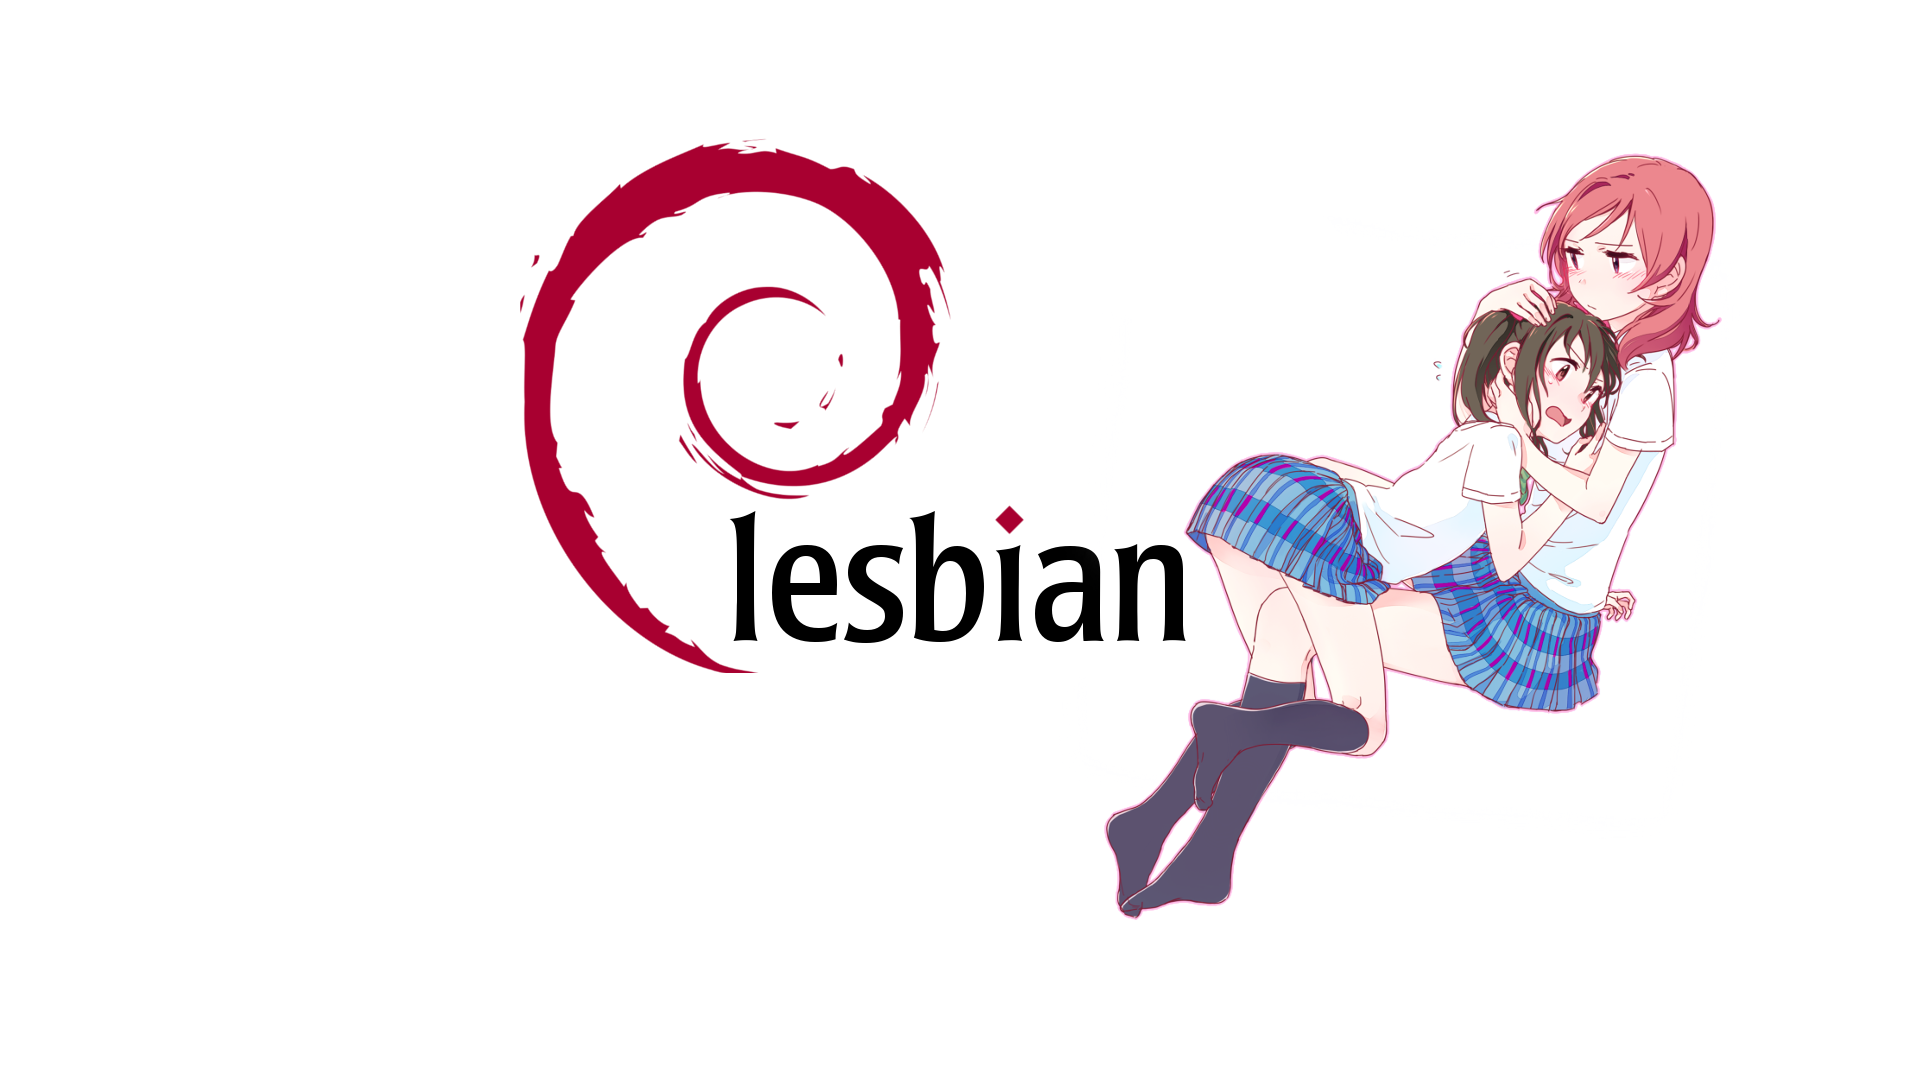 debian lesbian - lesbian